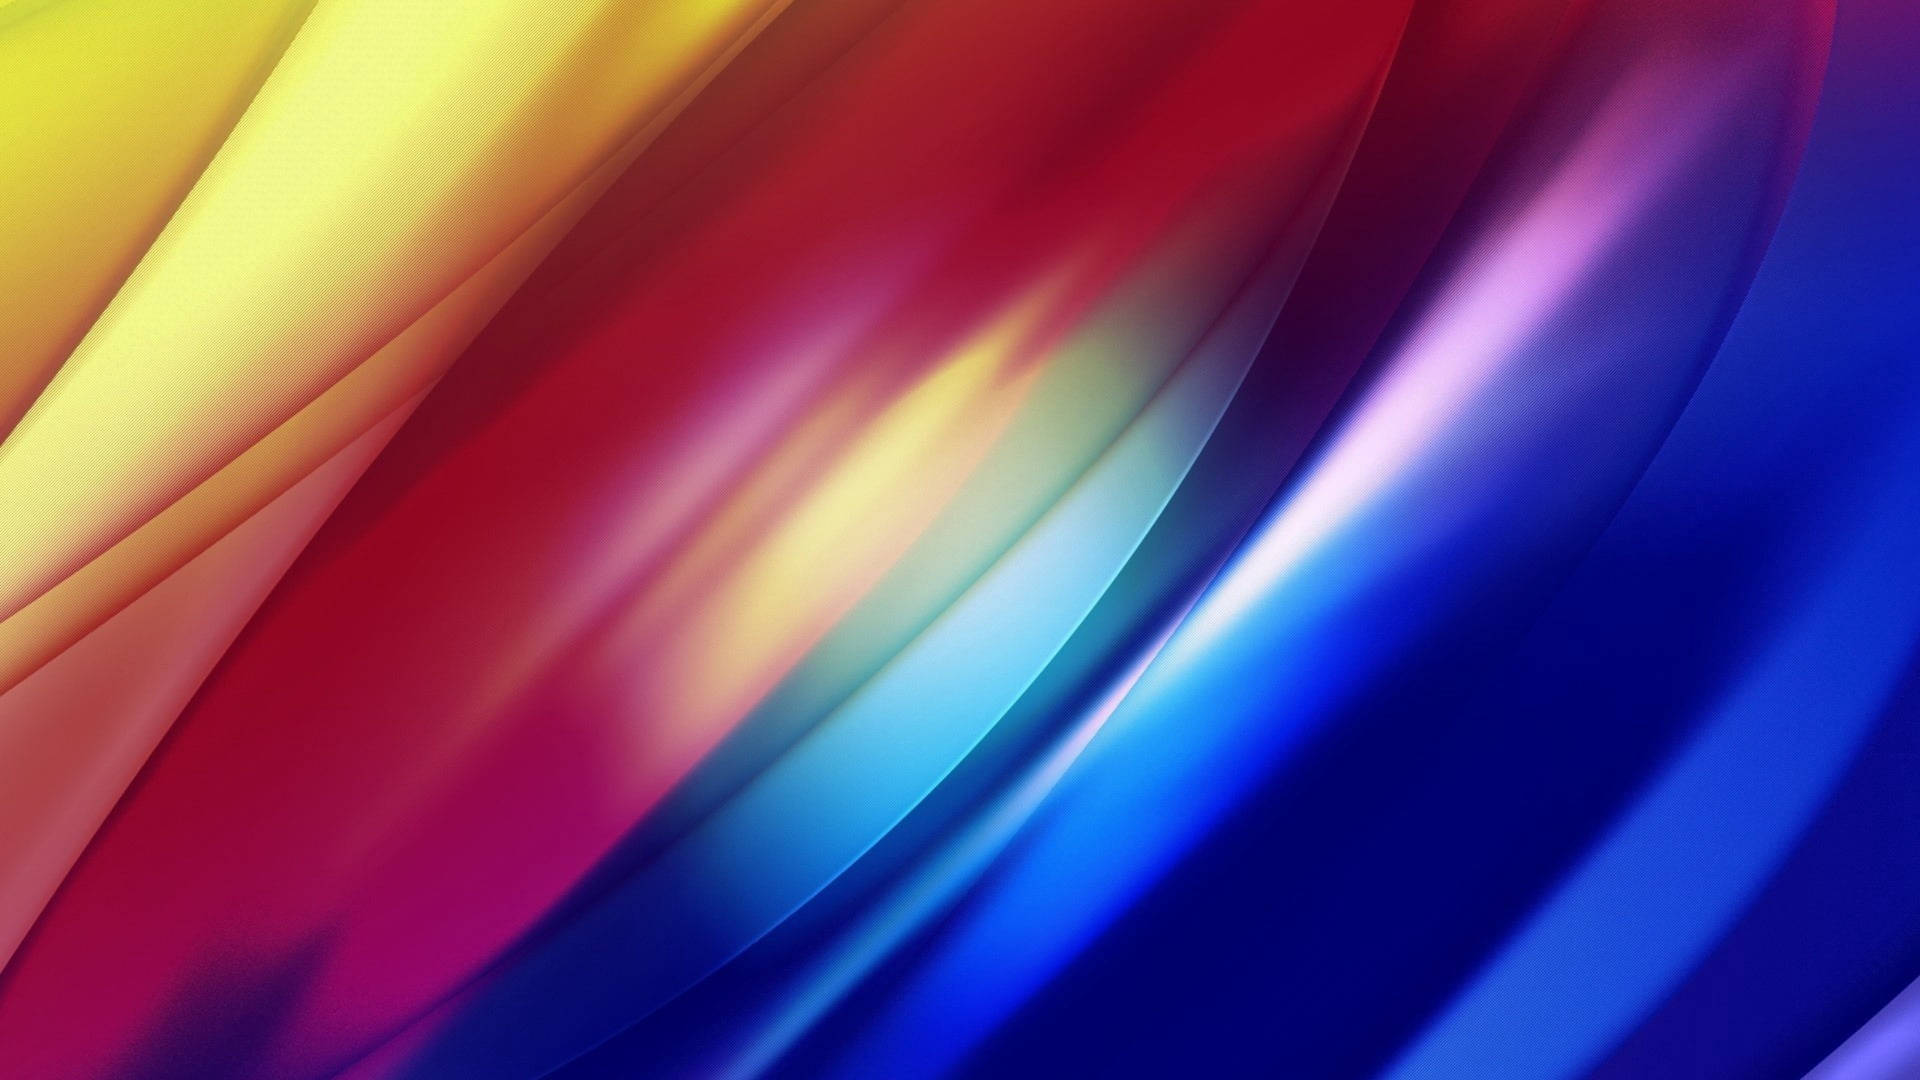 A Vibrant Spectrum Of Colors Seamlessly Blending Against A Black Background. Wallpaper